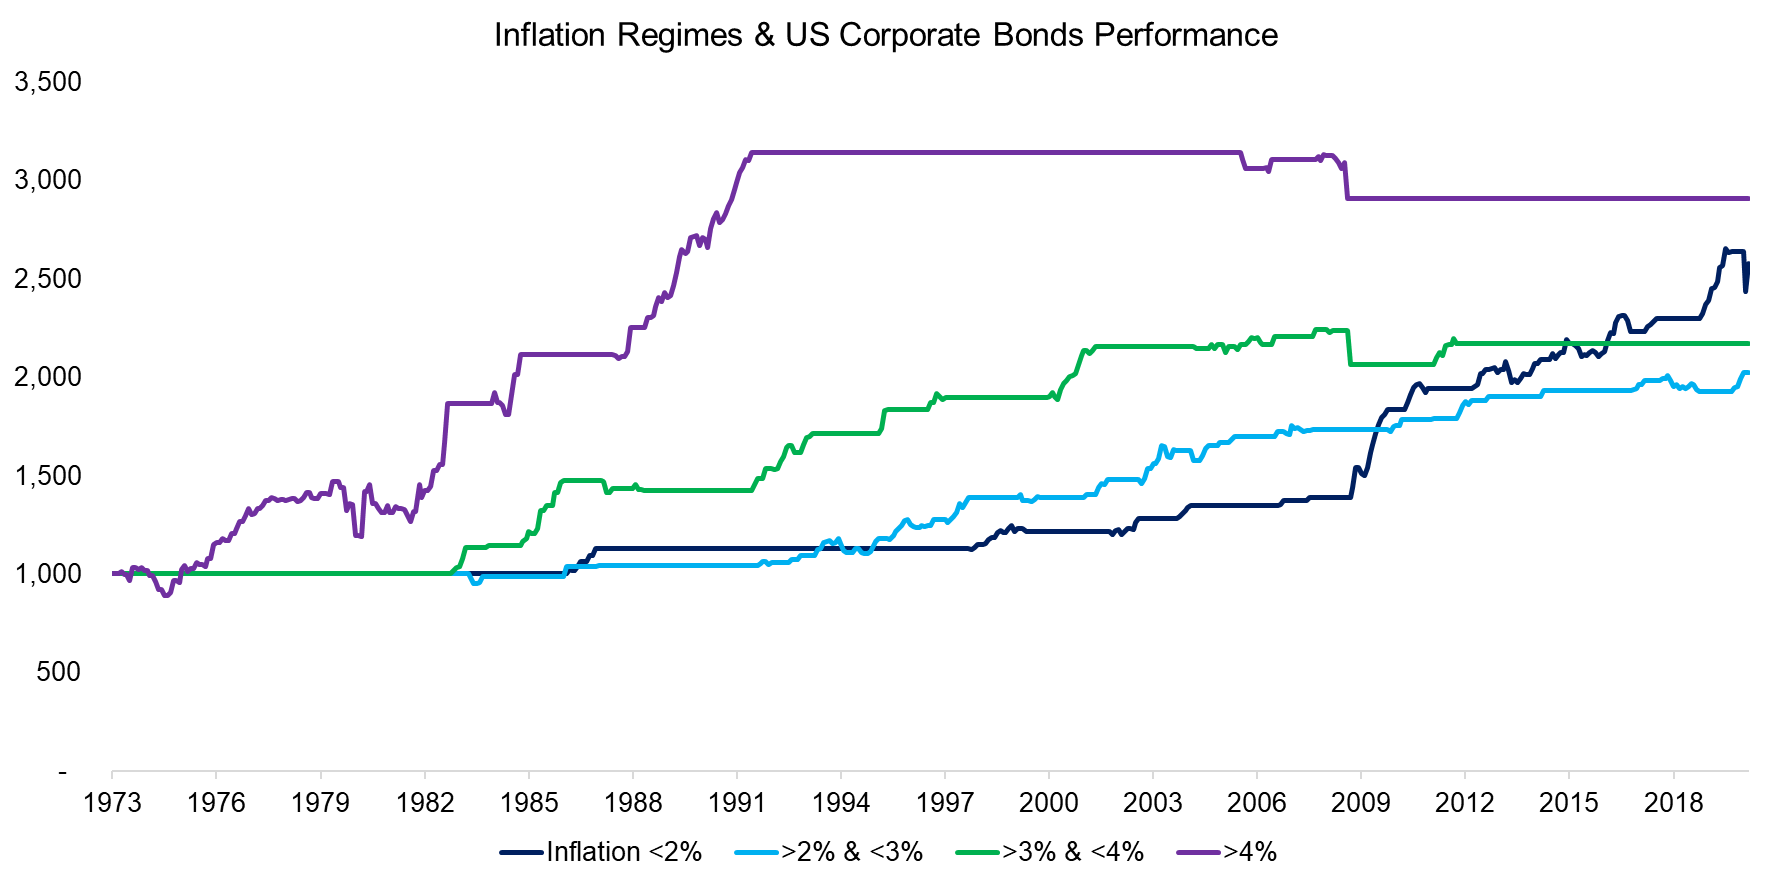 Inflation Regimes & US Corporate Bonds Performance